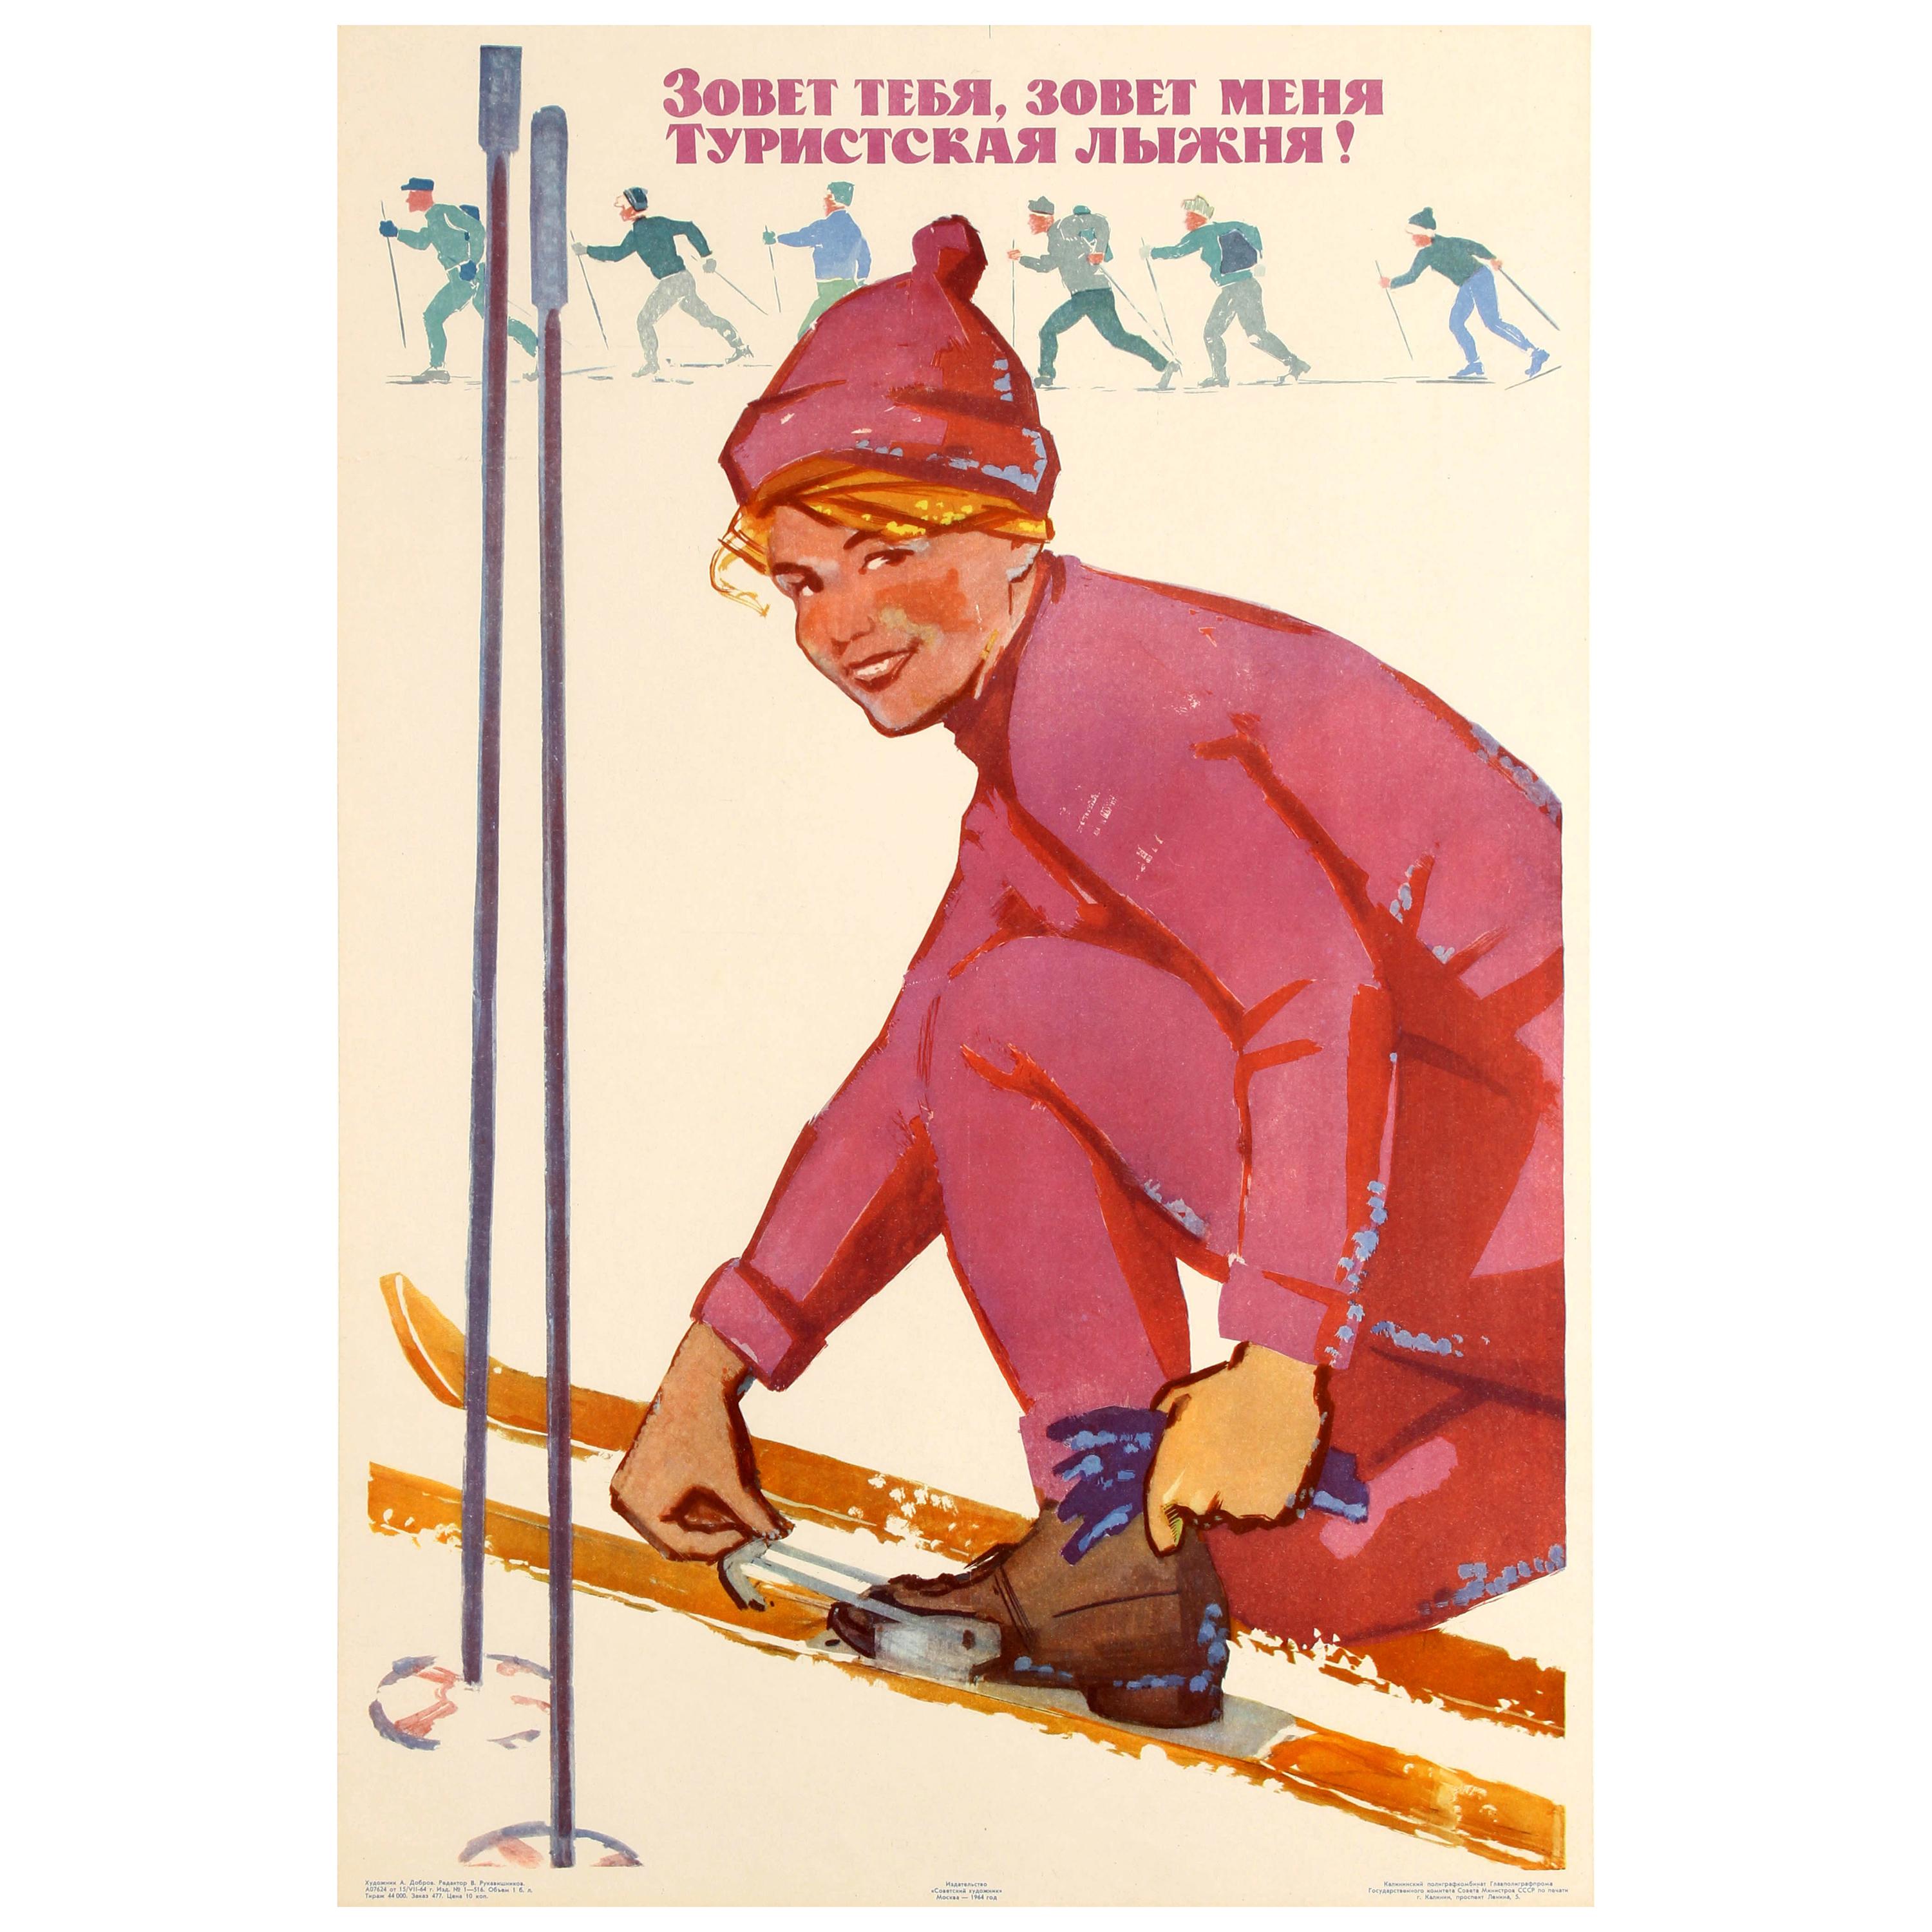 Original Vintage Soviet Winter Sport Skiing Poster - The Ski Track is Calling!